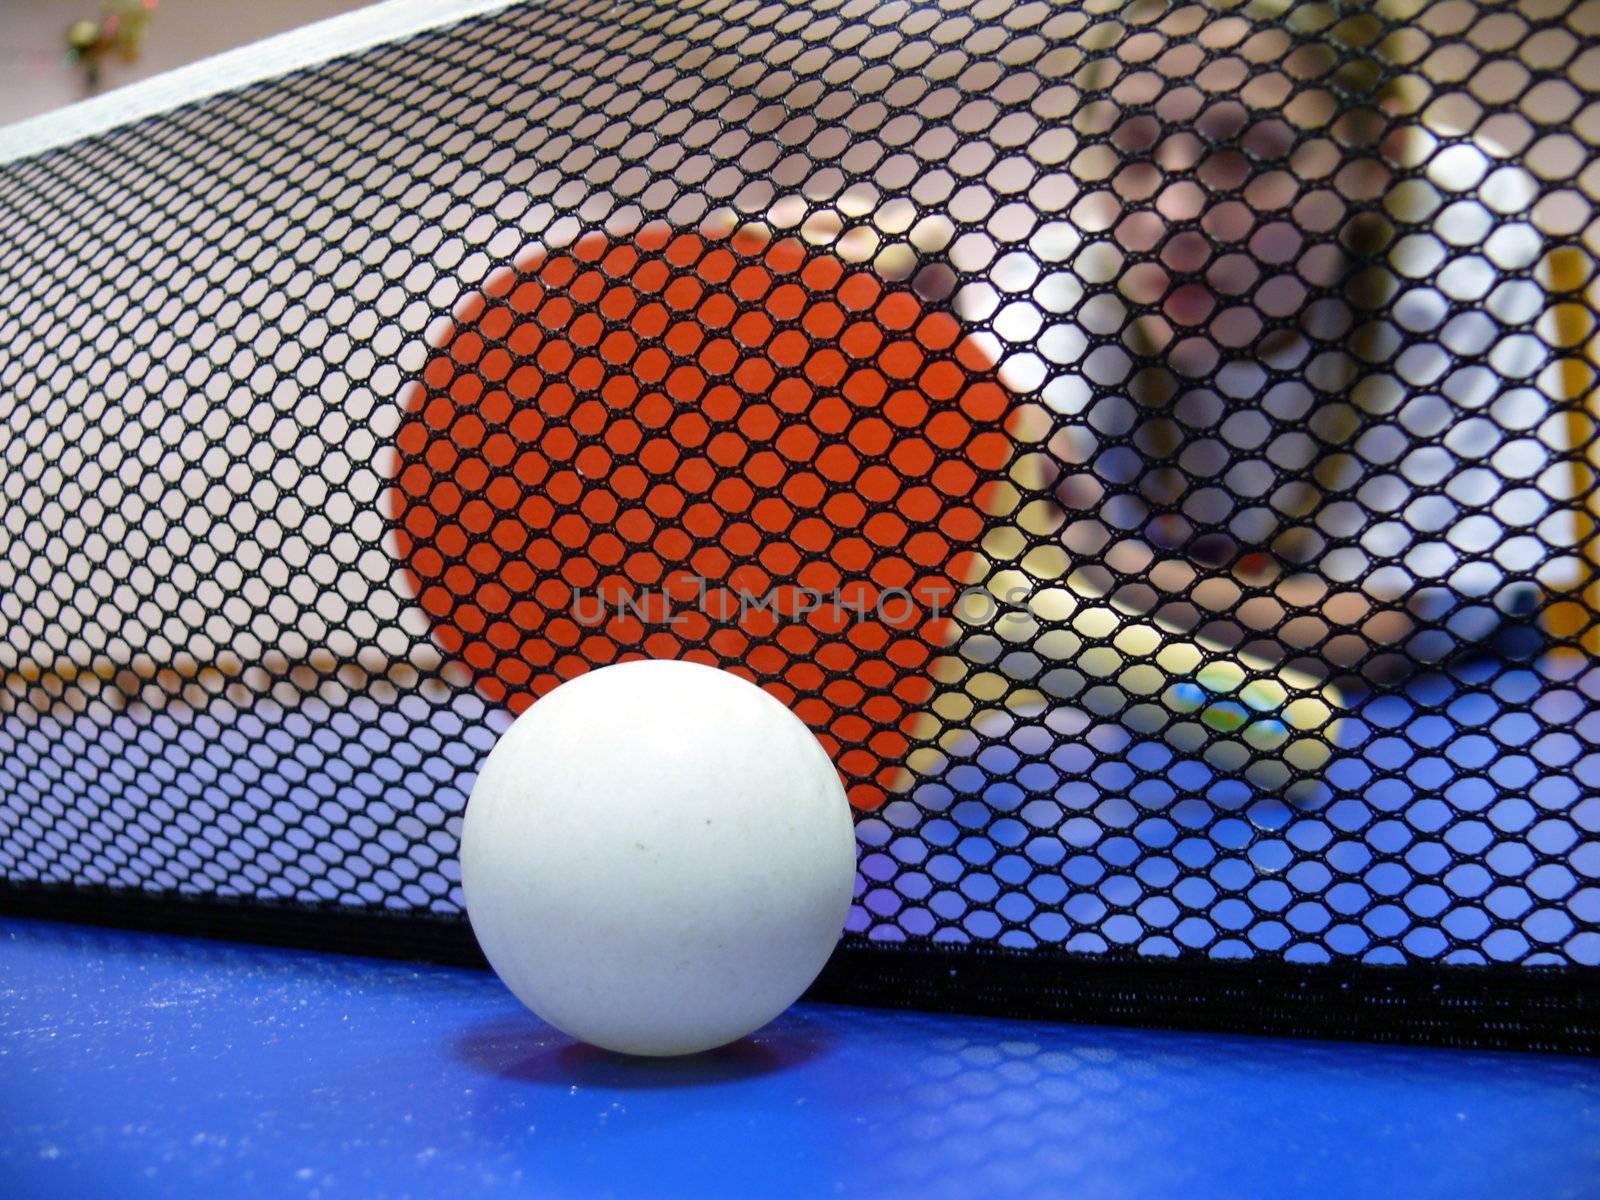 Pingpong ball and racket by Stoyanov